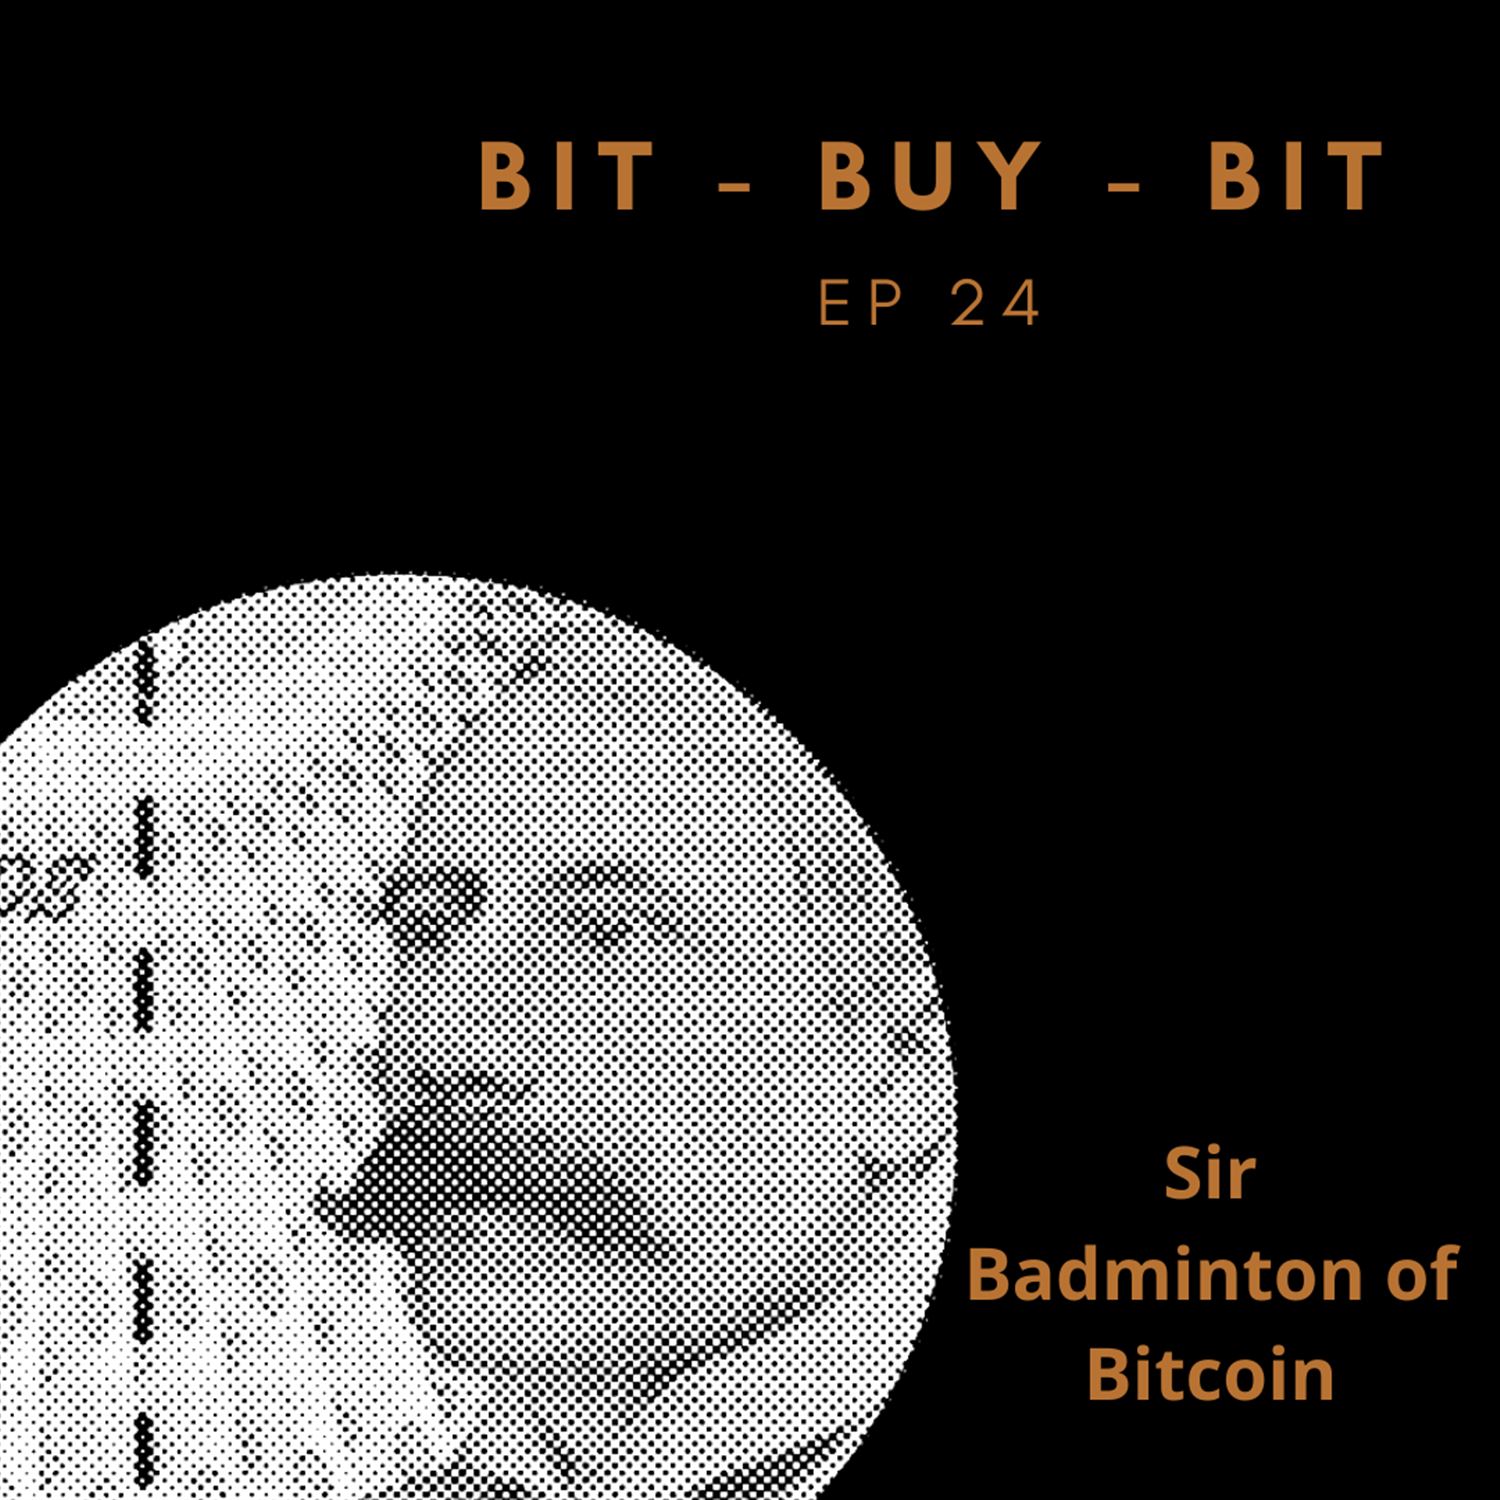 EP24 Bitcoin podcast with Sir Badminton of Bitcoin @HodlerThanThou. 